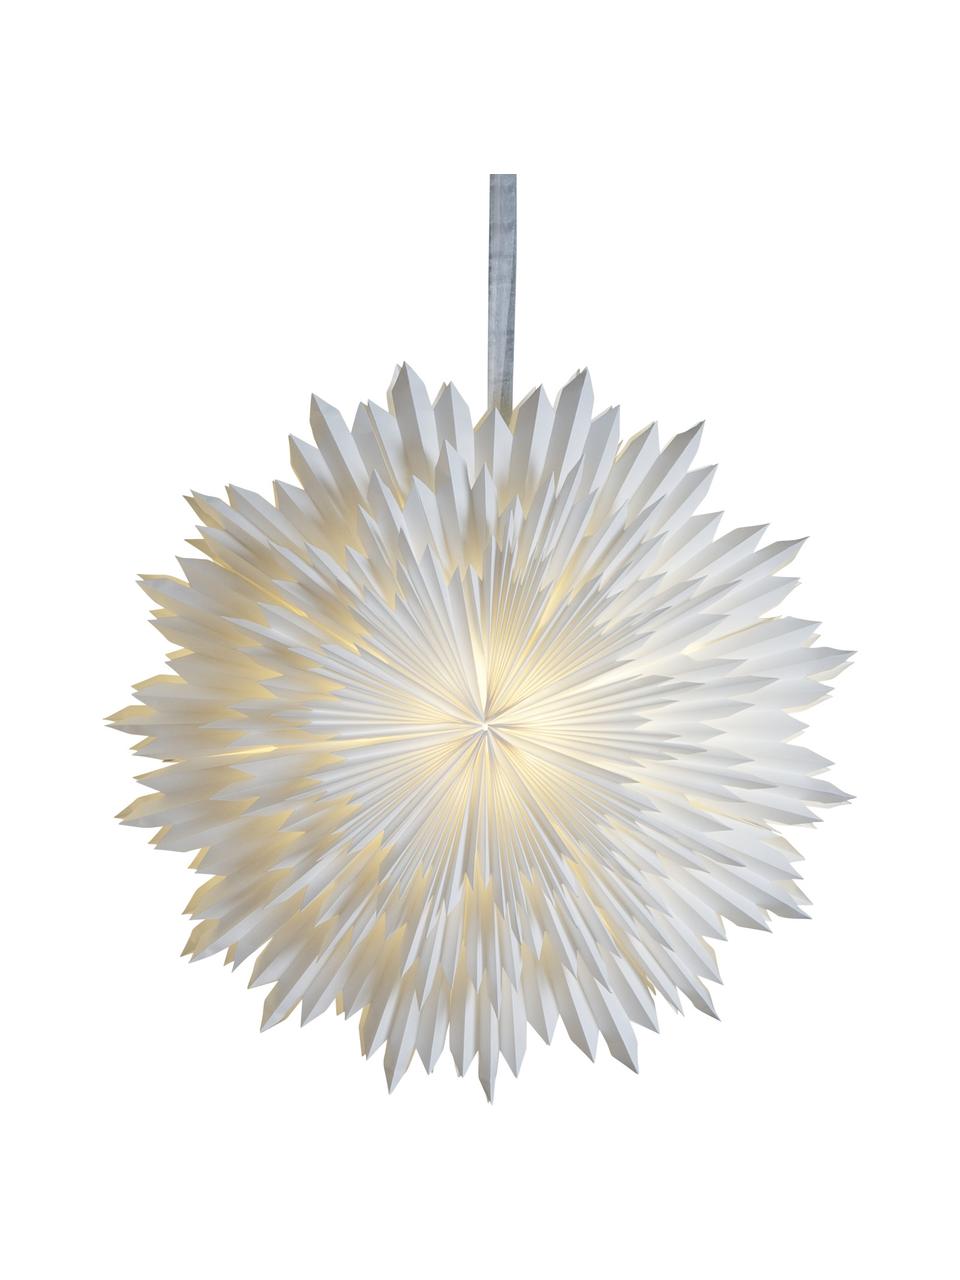 Estrella decorativa de papel Ice, Papel, Blanco, Ø 70 cm